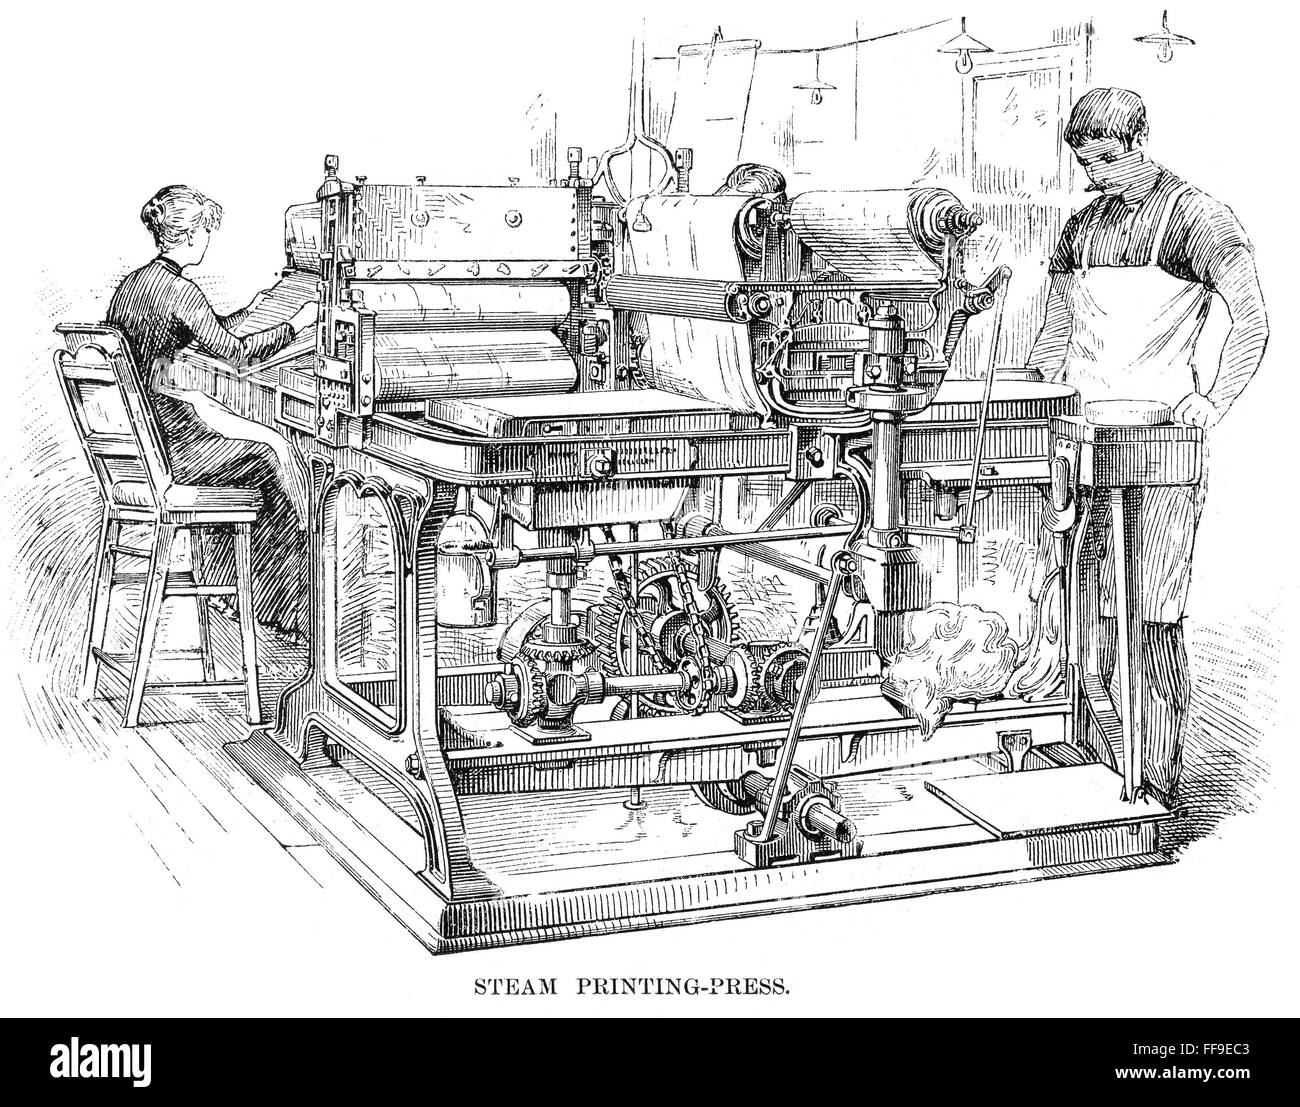 Printing press steam фото 10